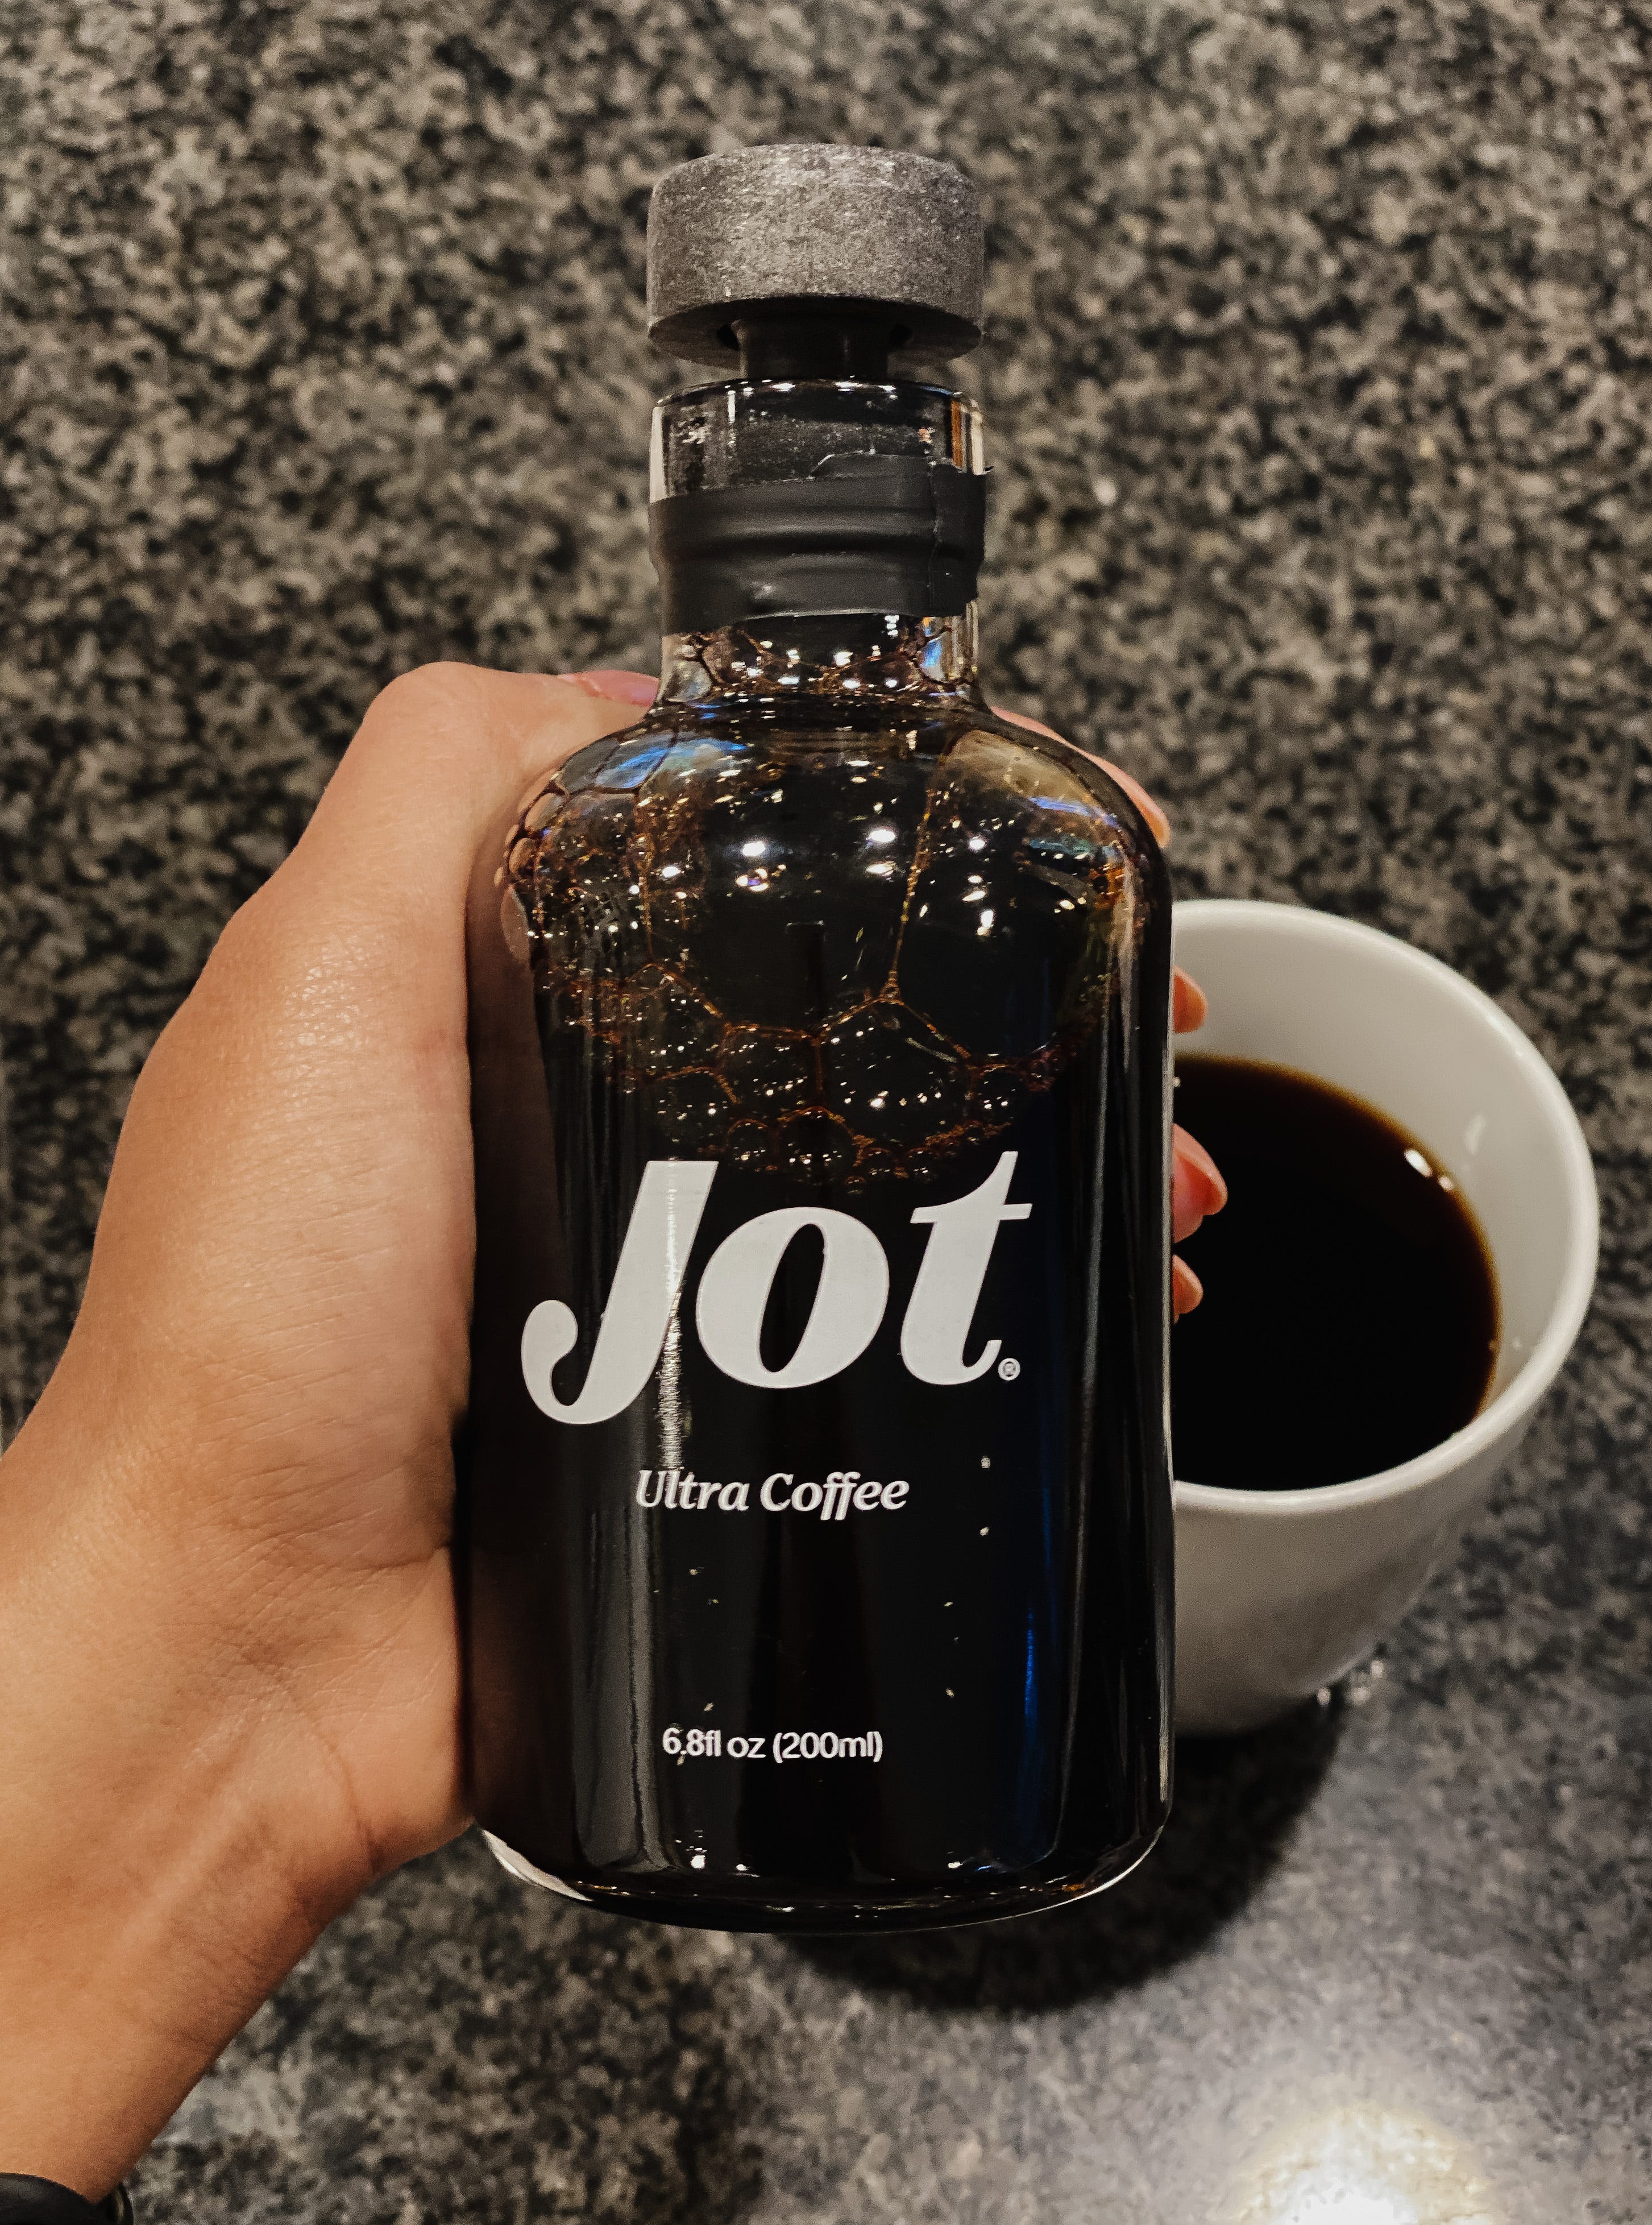 Honest Review: Jot Coffee - The Honest Tester